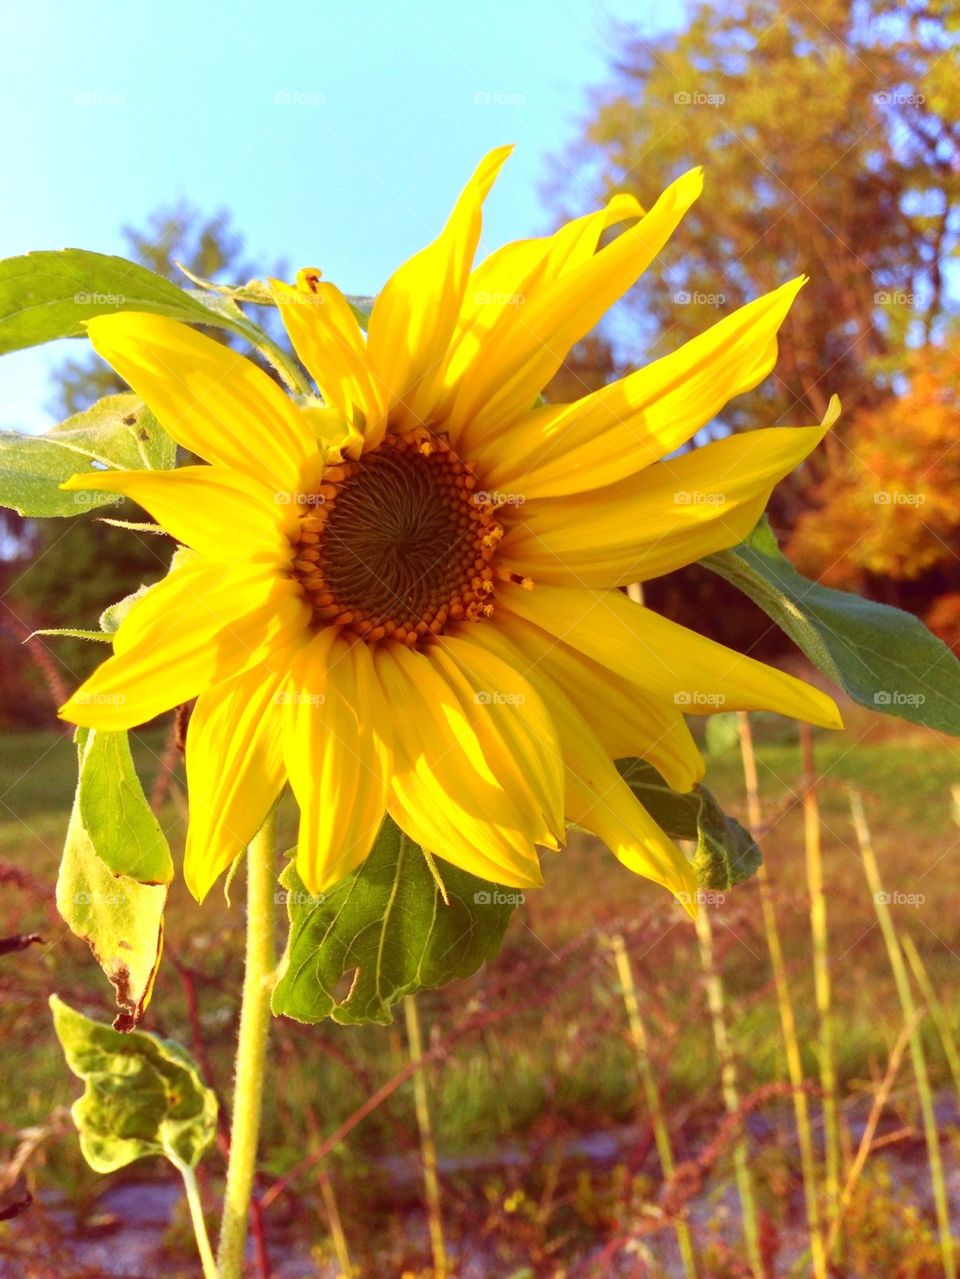 Sunflower Heaven!